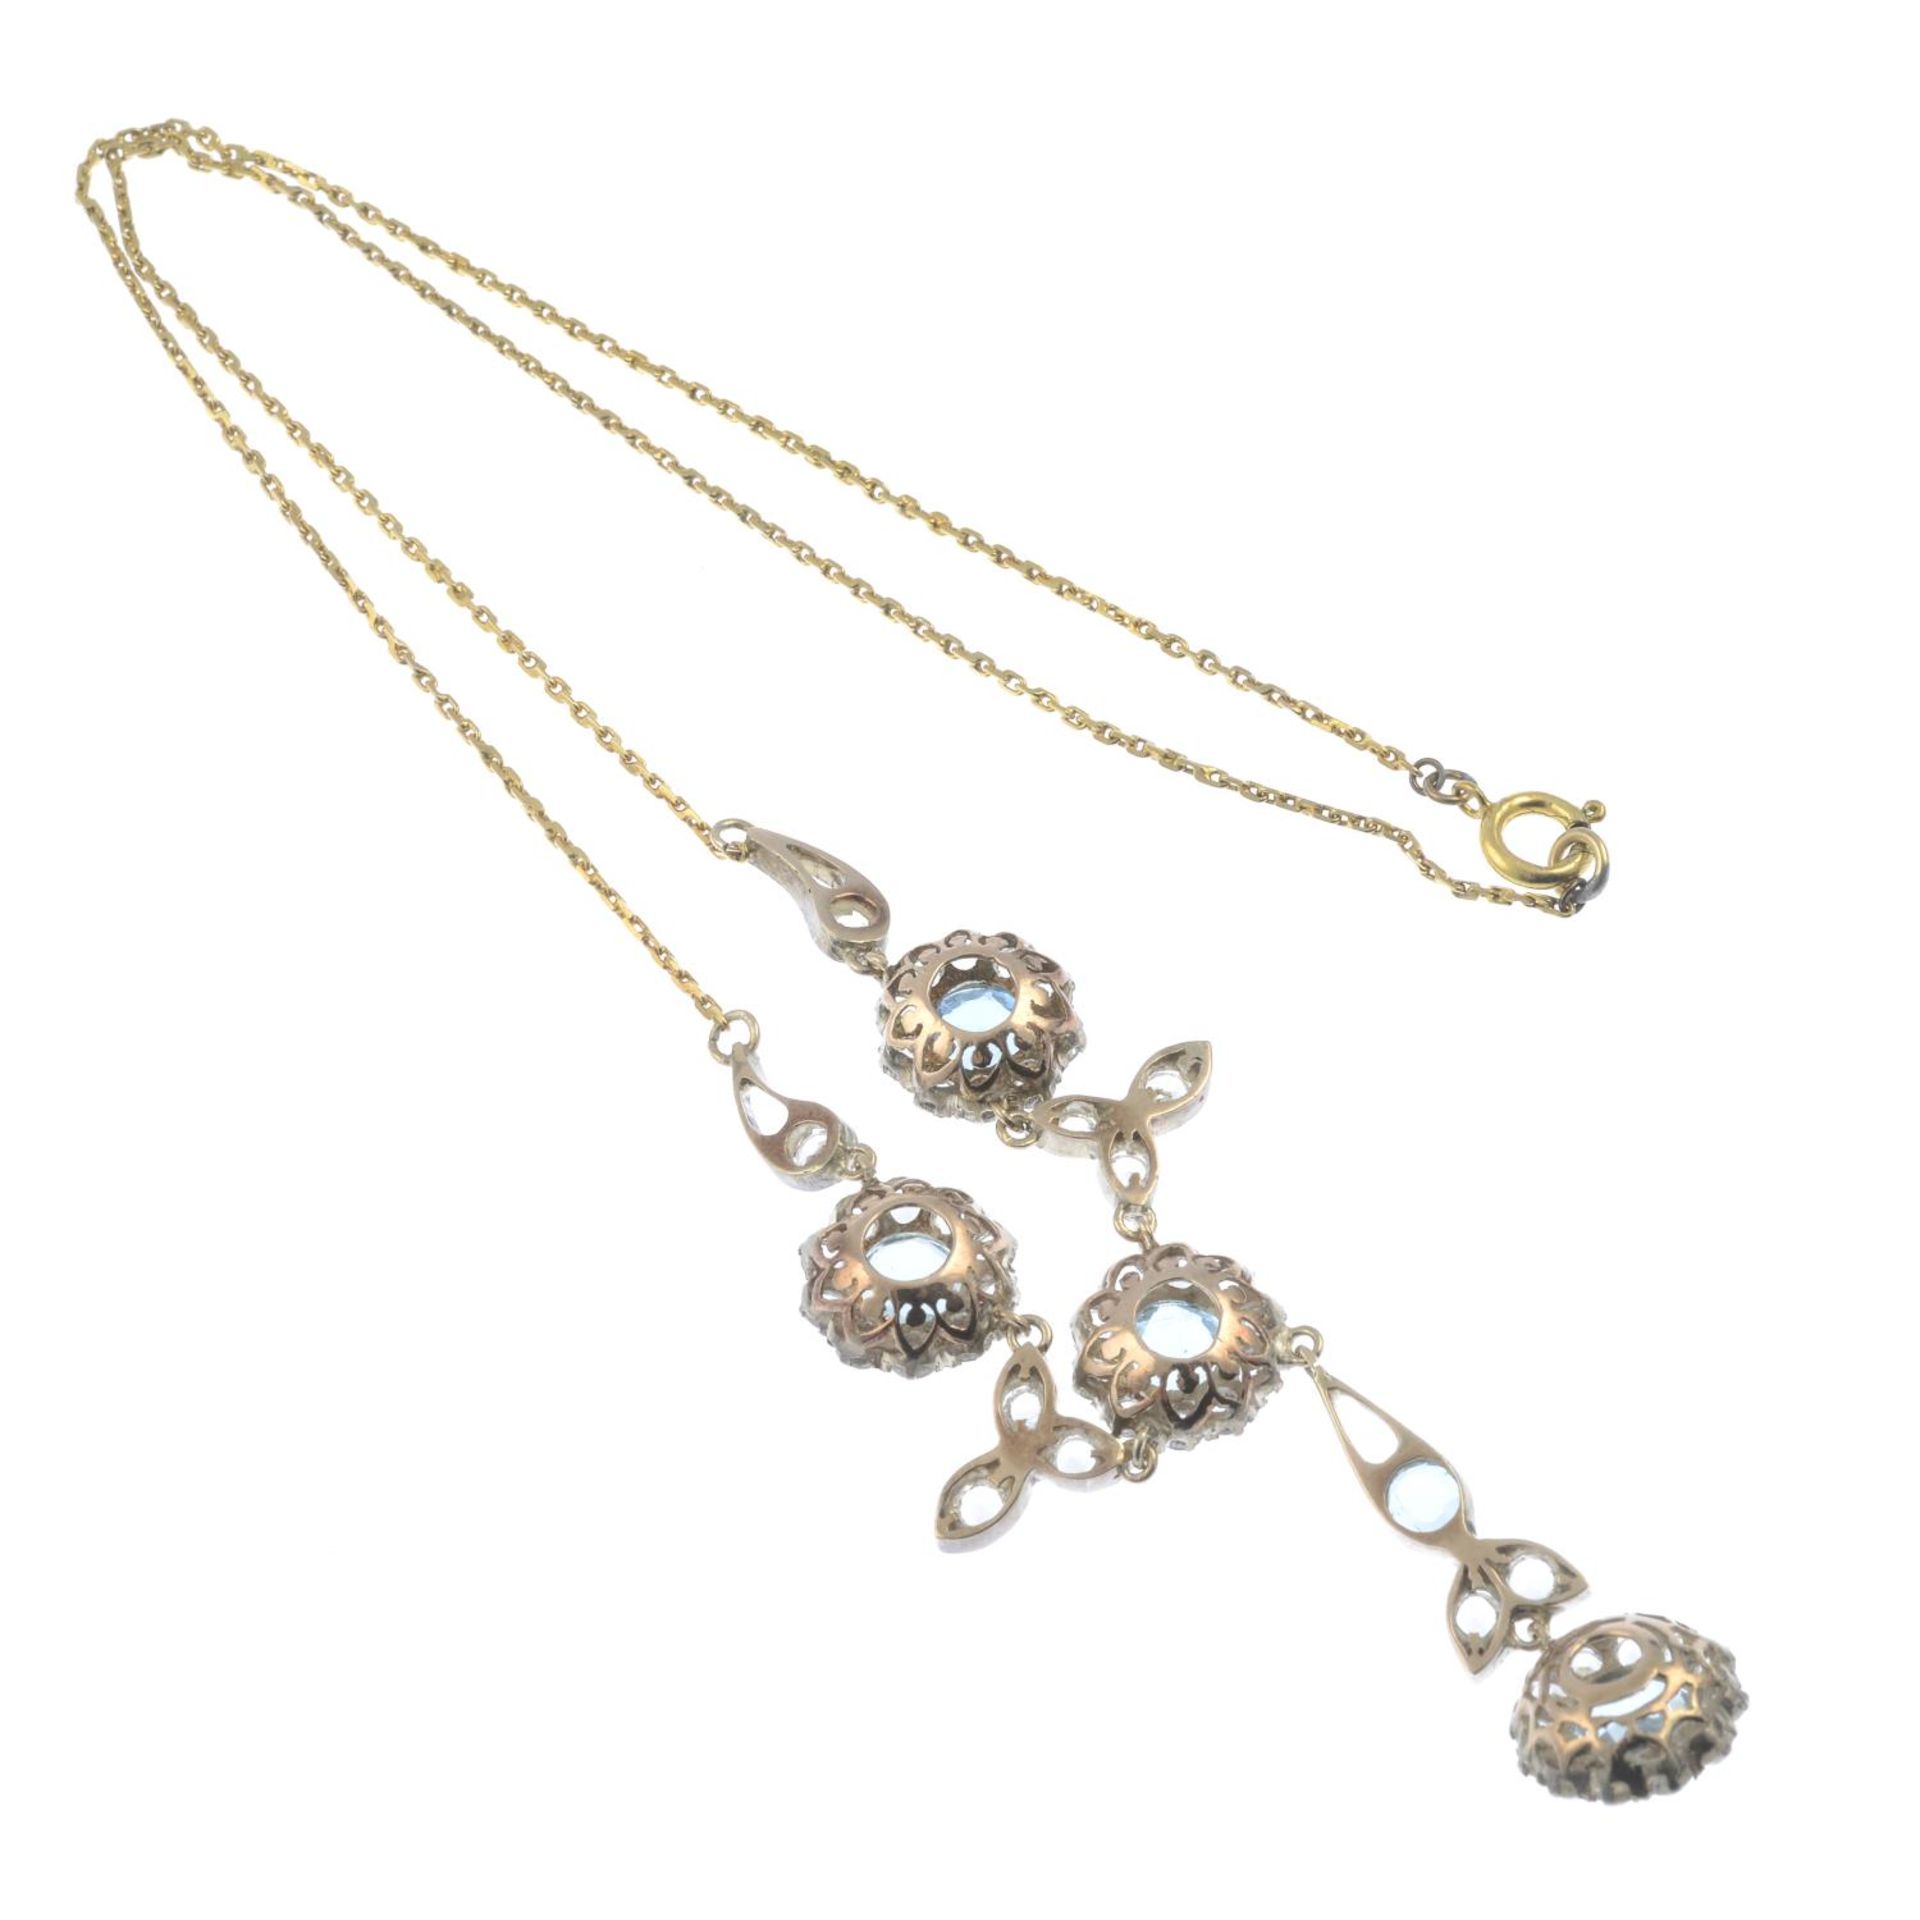 A mid 20th century aquamarine and gem-set necklace.Length 39cms. - Image 2 of 2